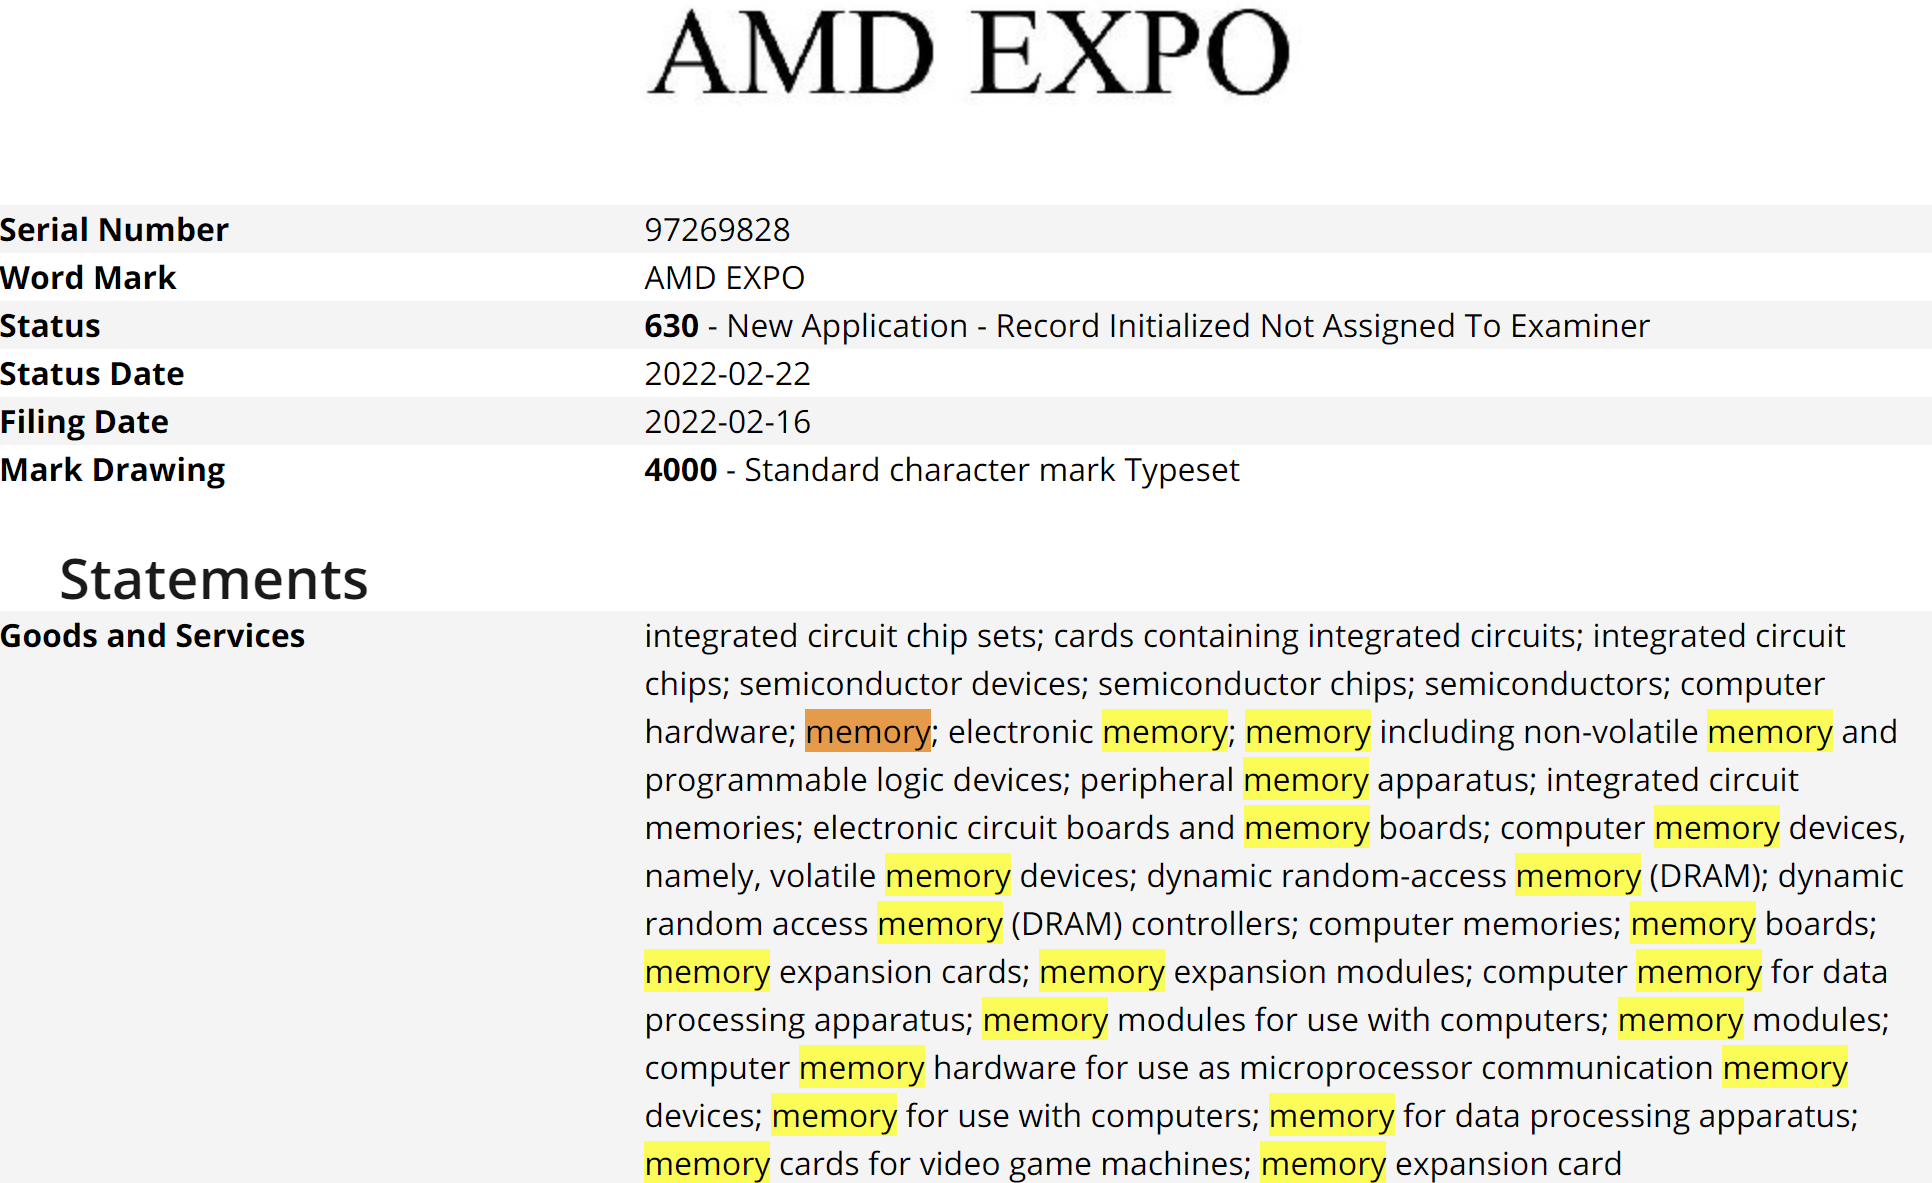 AMD EXPO Trademark